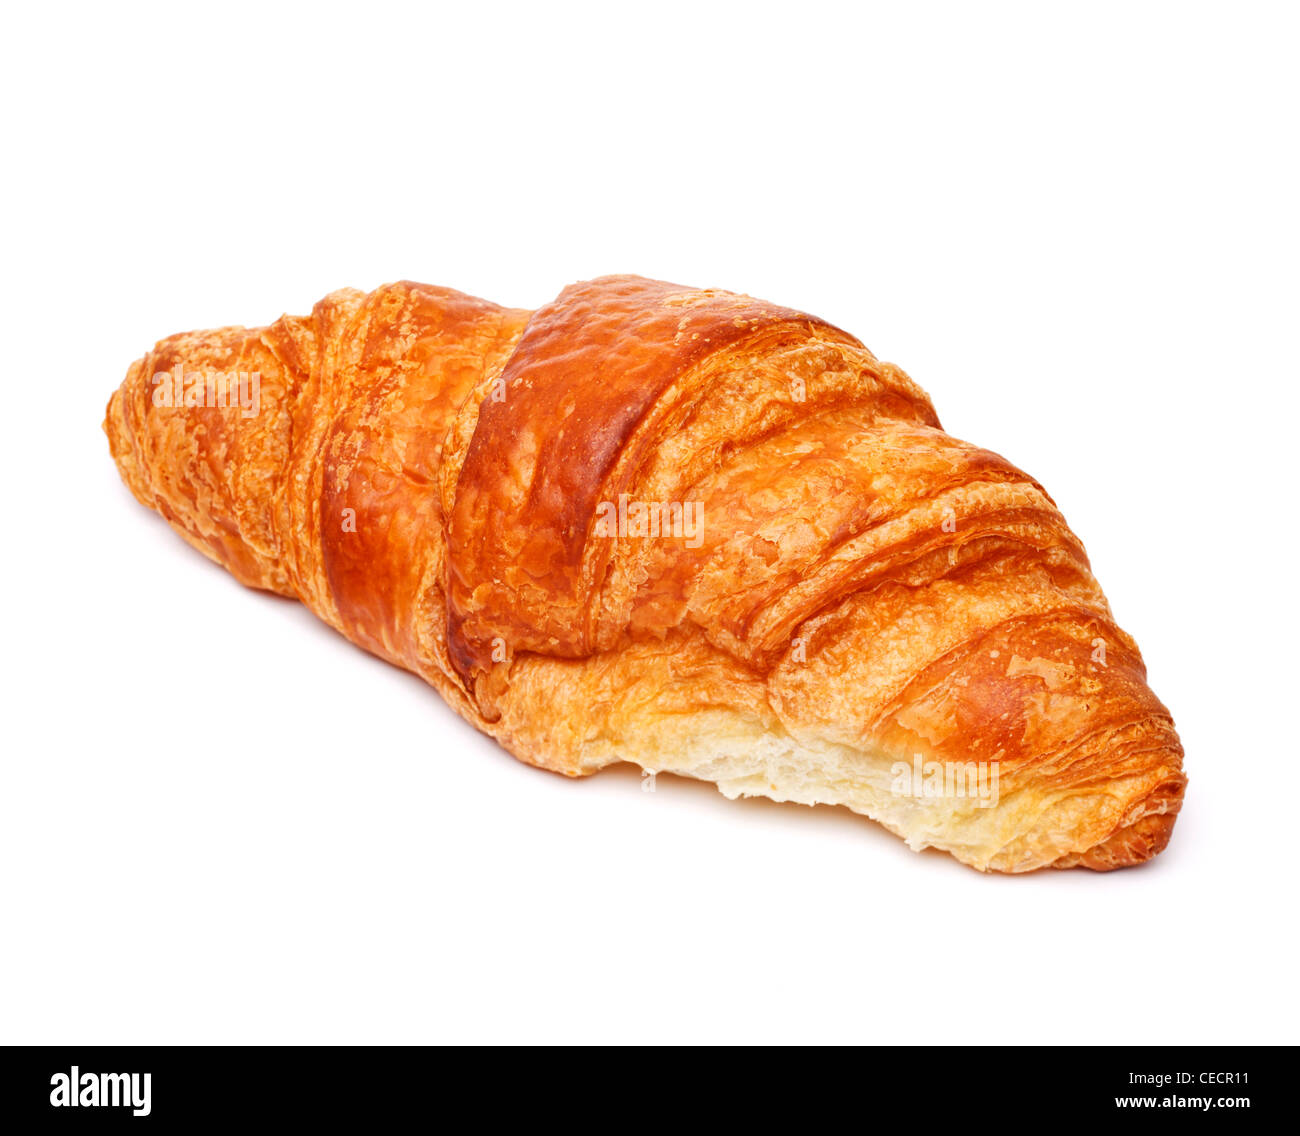 Croissant close up on white background Banque D'Images